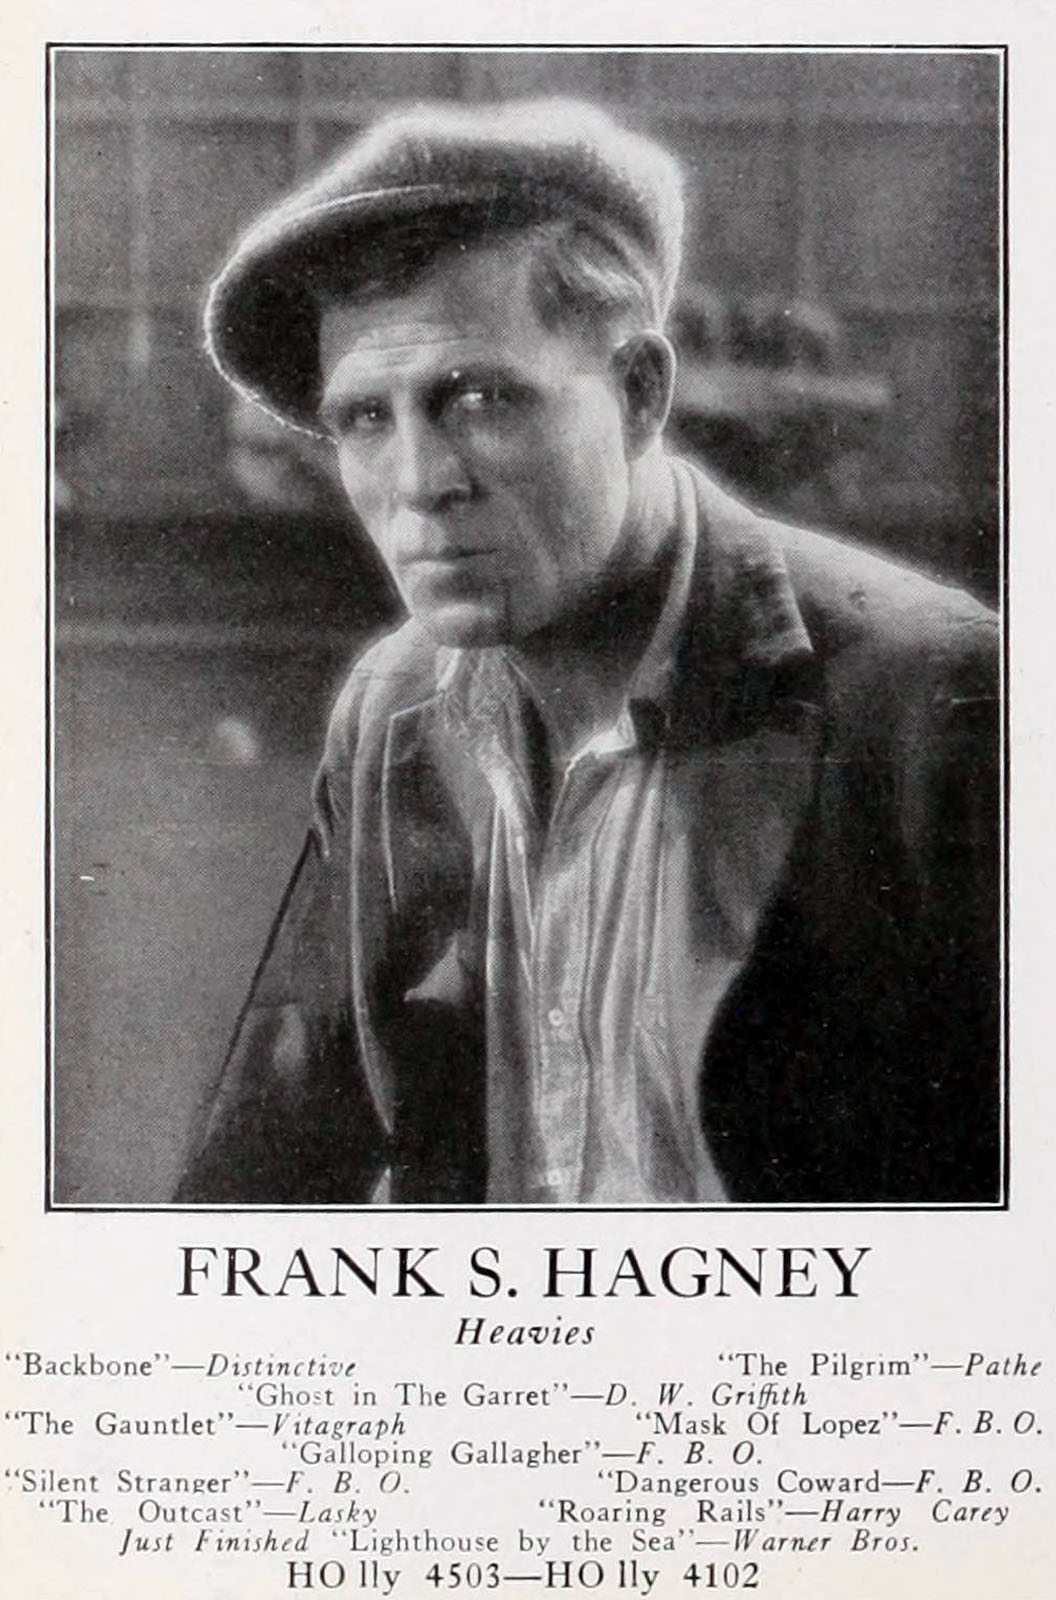 Frank Hagney